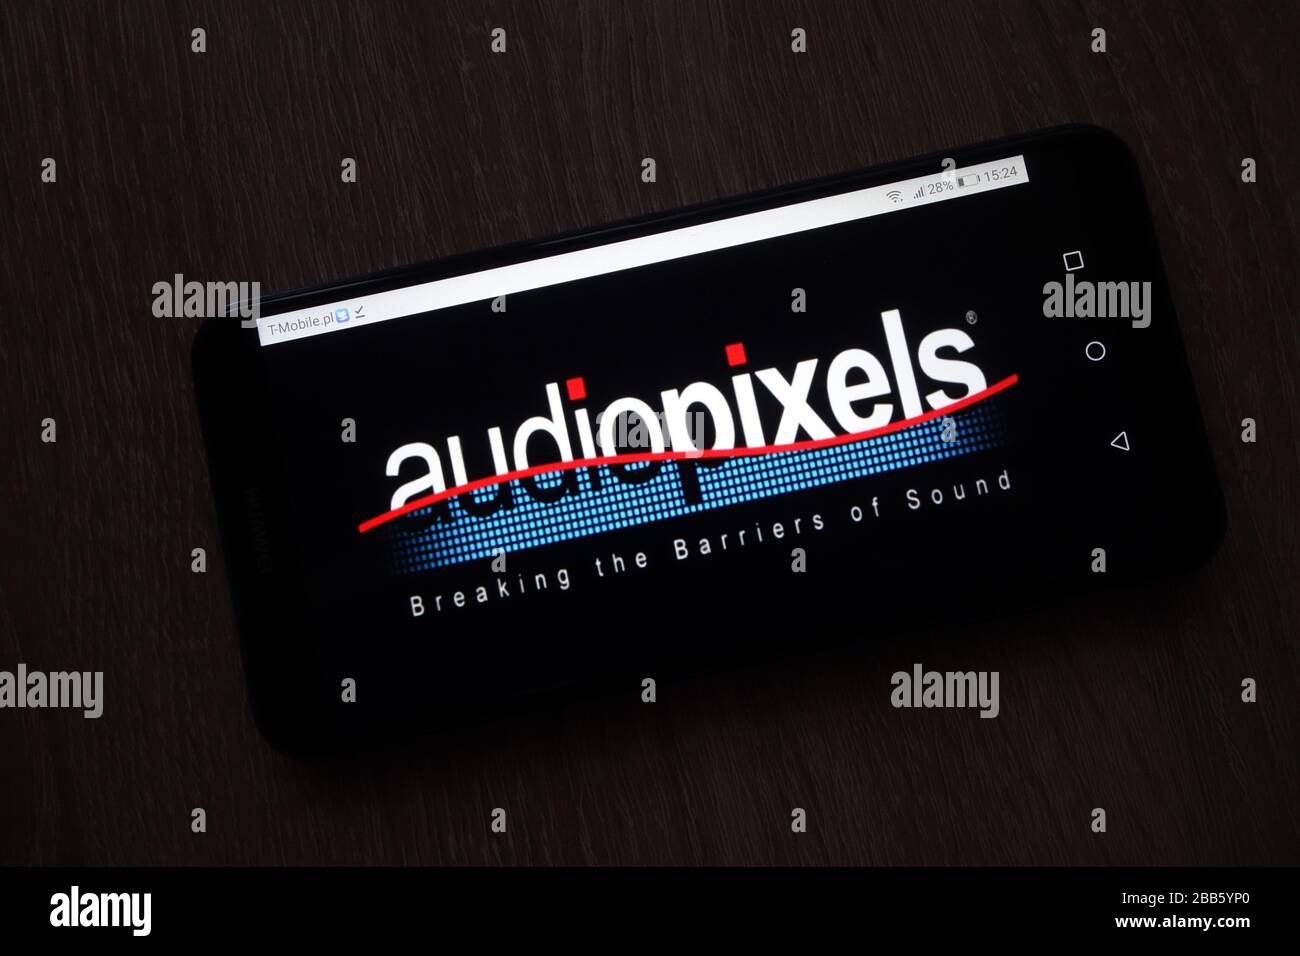 Audio Pixels Limited logo displayed on smartphone Stock Photo